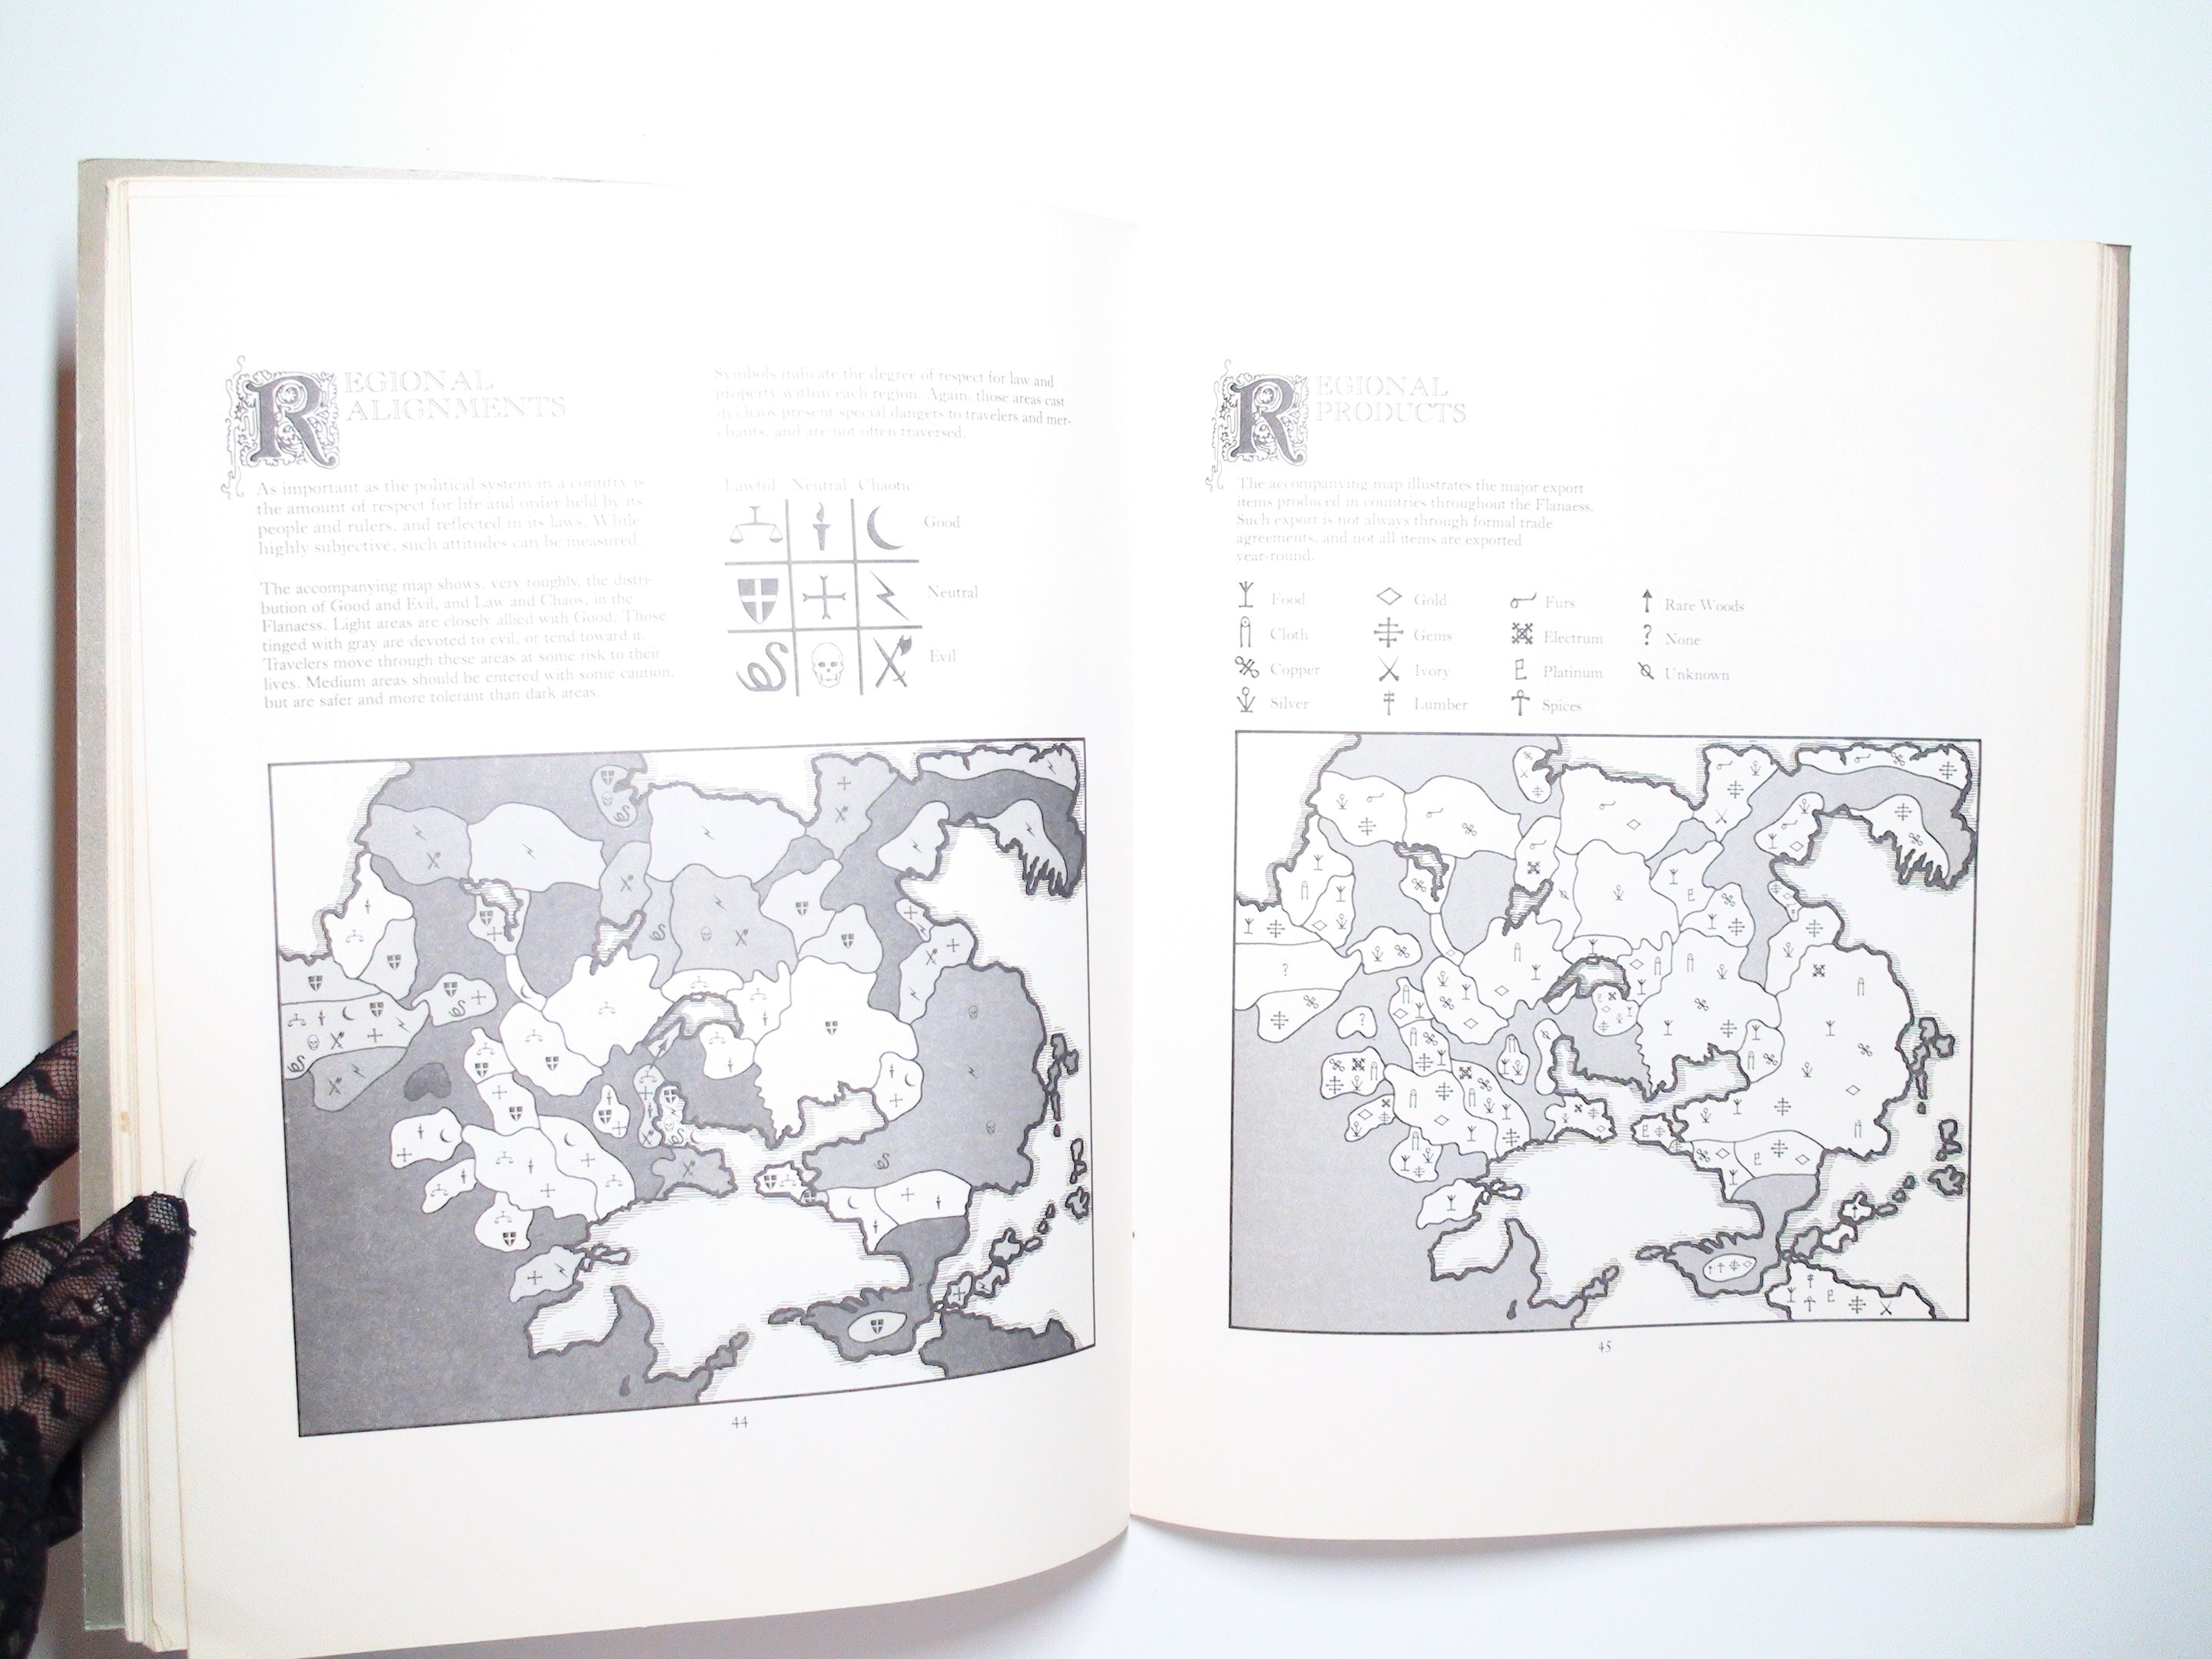 A Guide to Greyhawk Vol III + Glossography, By Gary Gygax, TSR, 1983